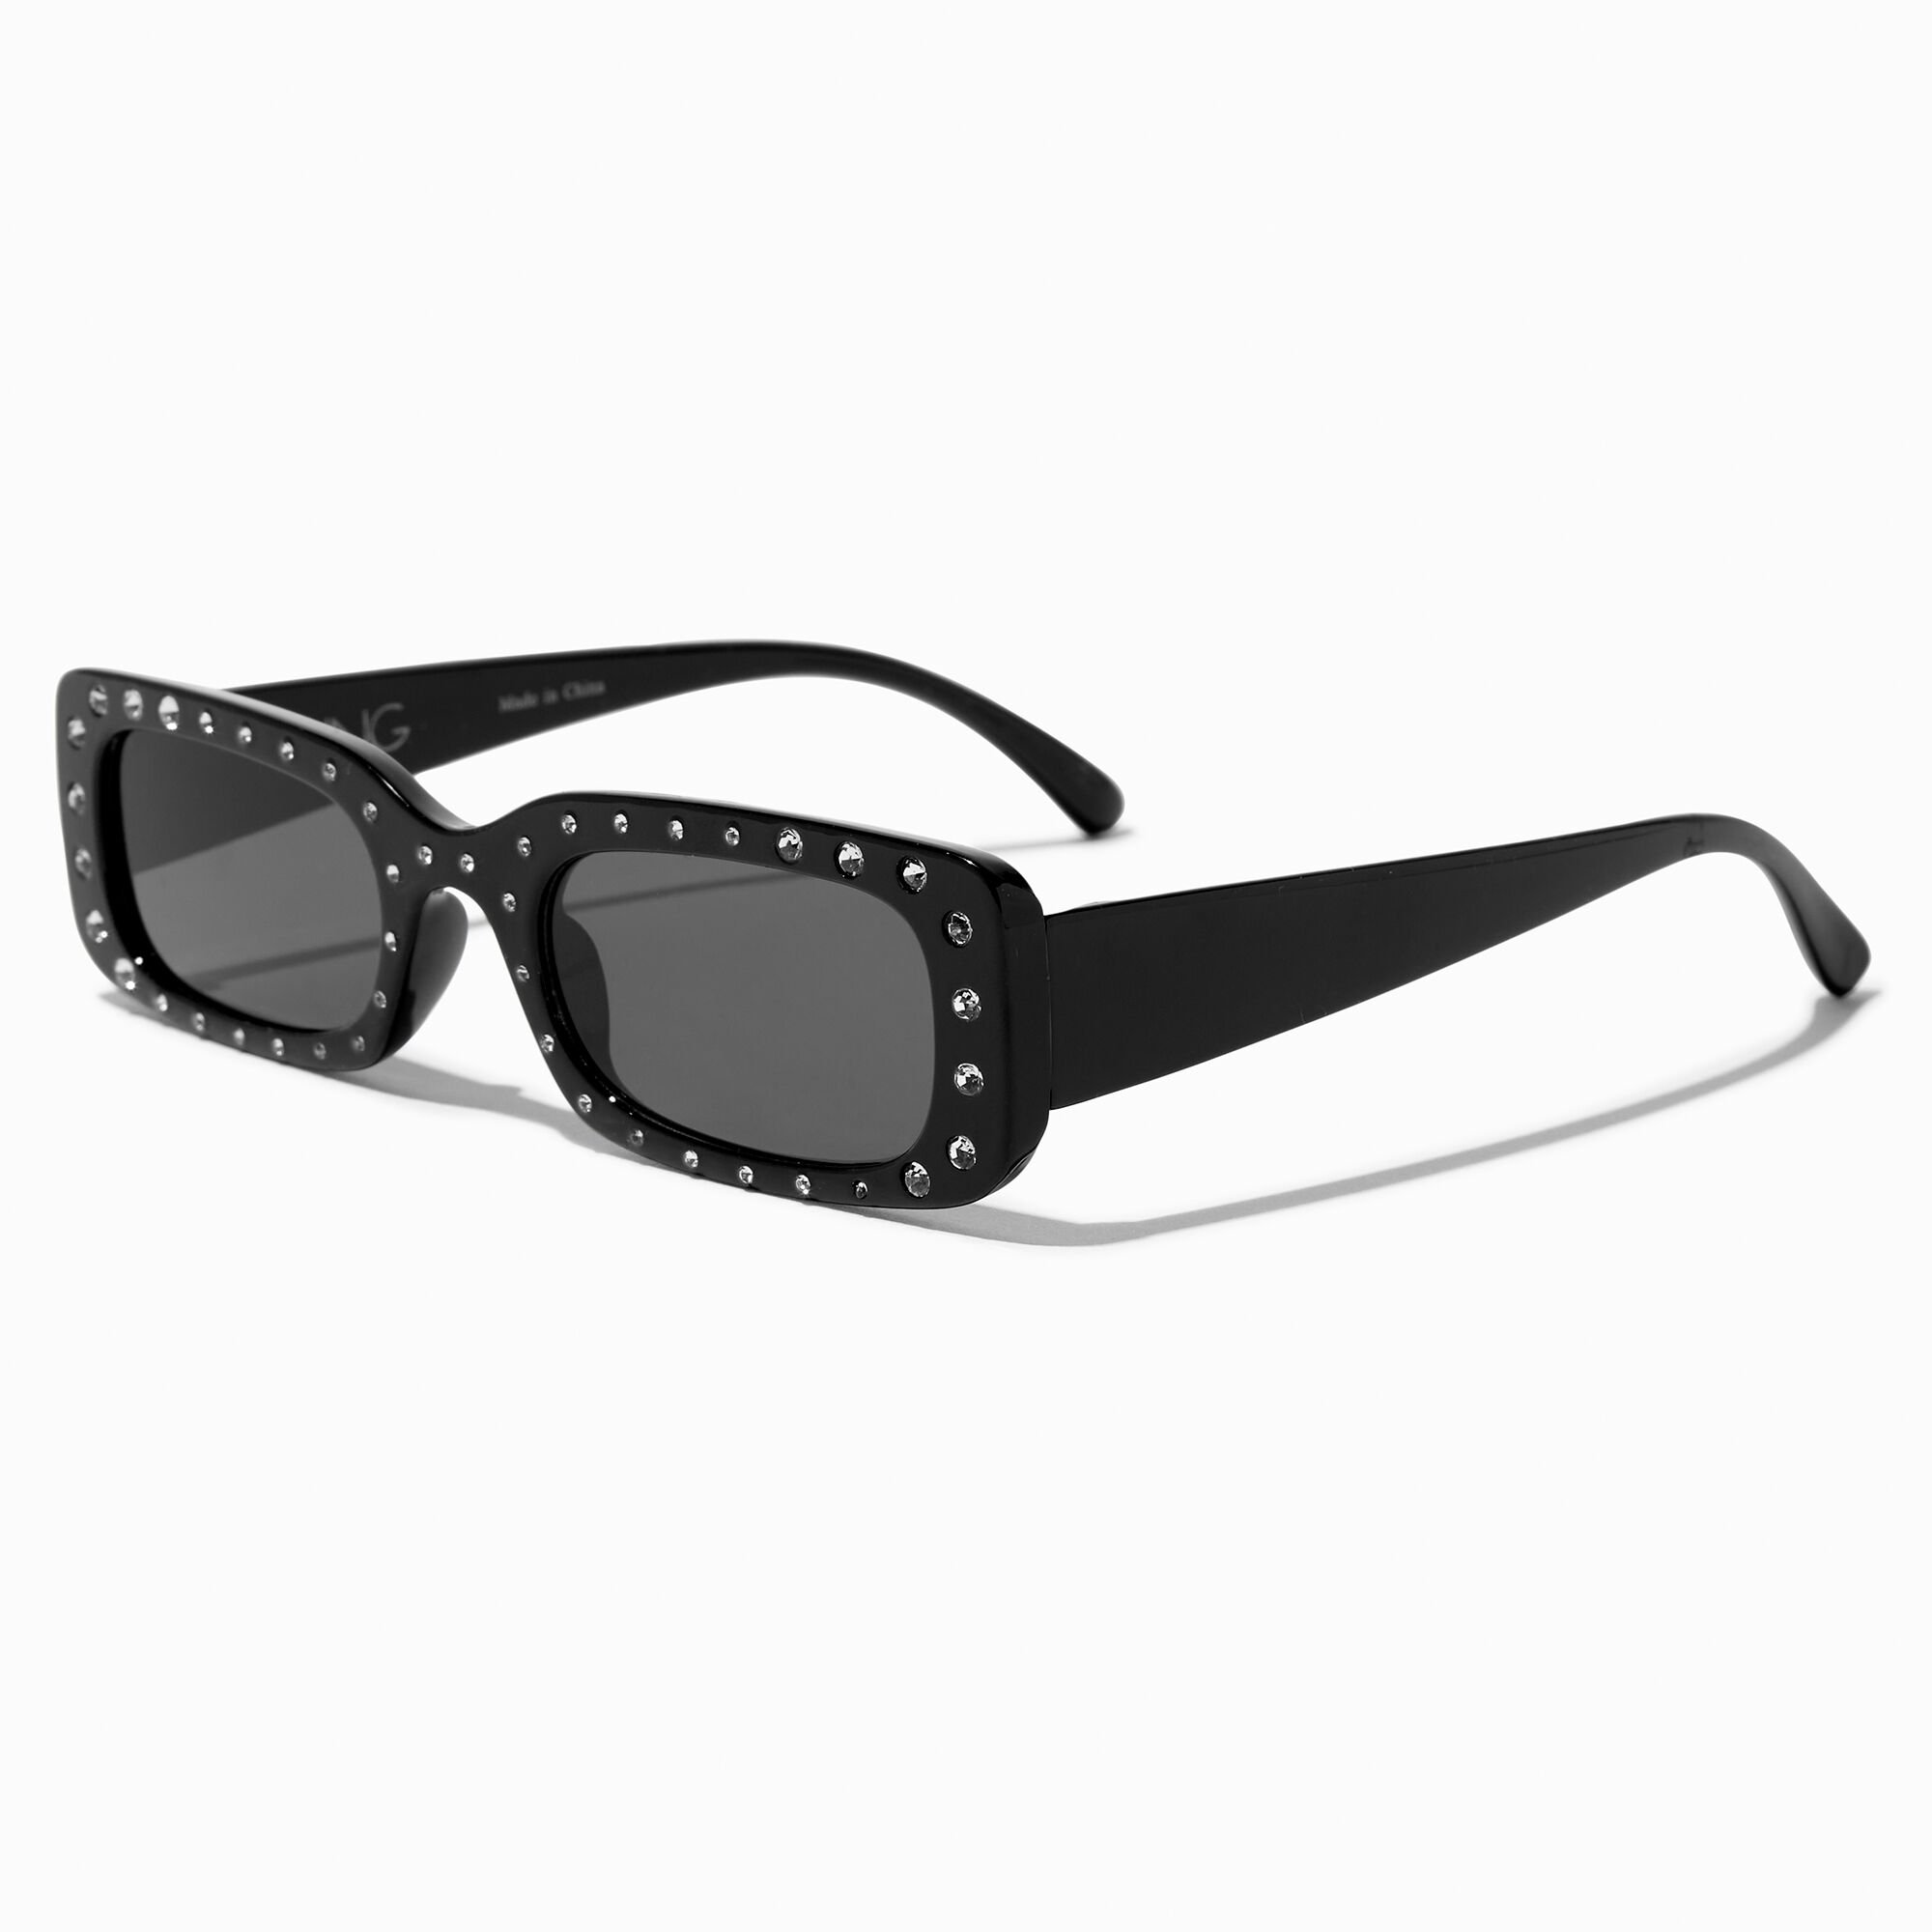 View Claires Rhinestone Studded Rectangular Sunglasses Black information